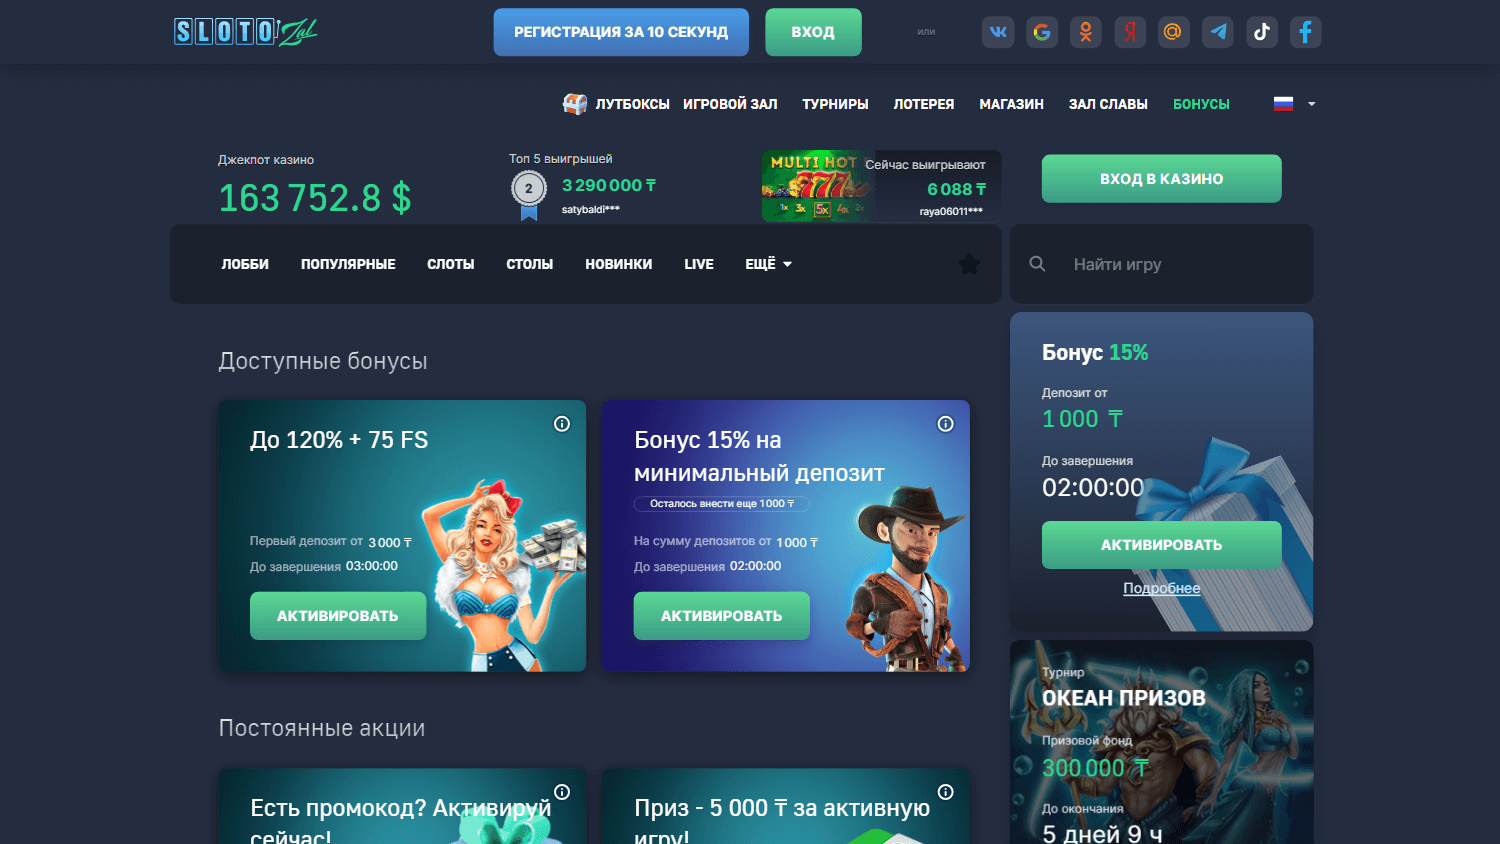 slotozal_casino_promotions_desktop